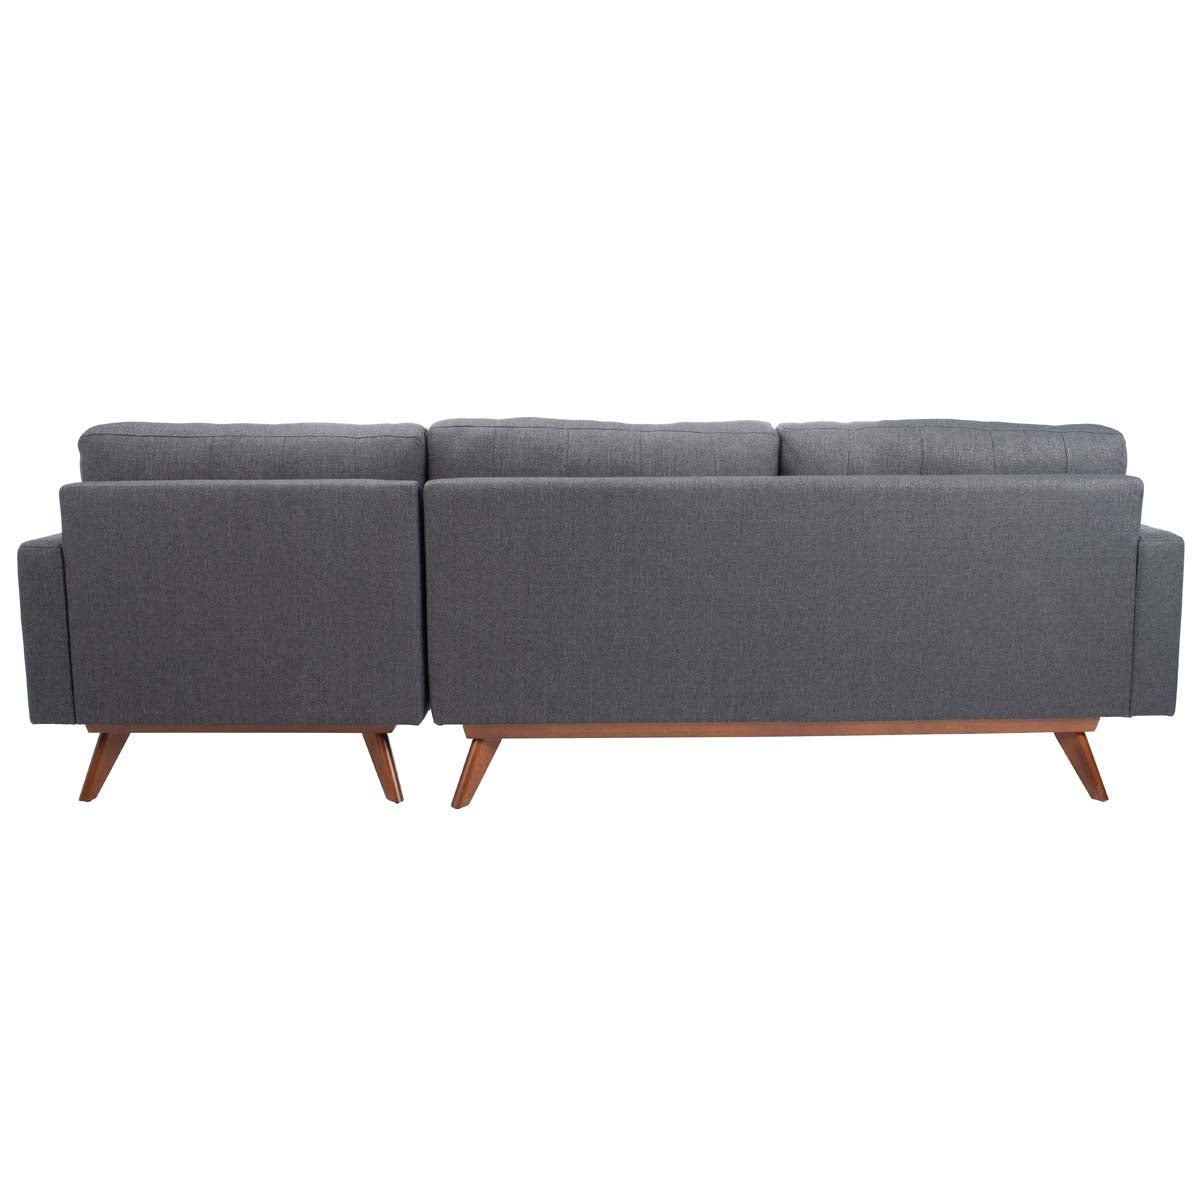 Safavieh Couture Gneiss Modern Linen Sectional Sofa